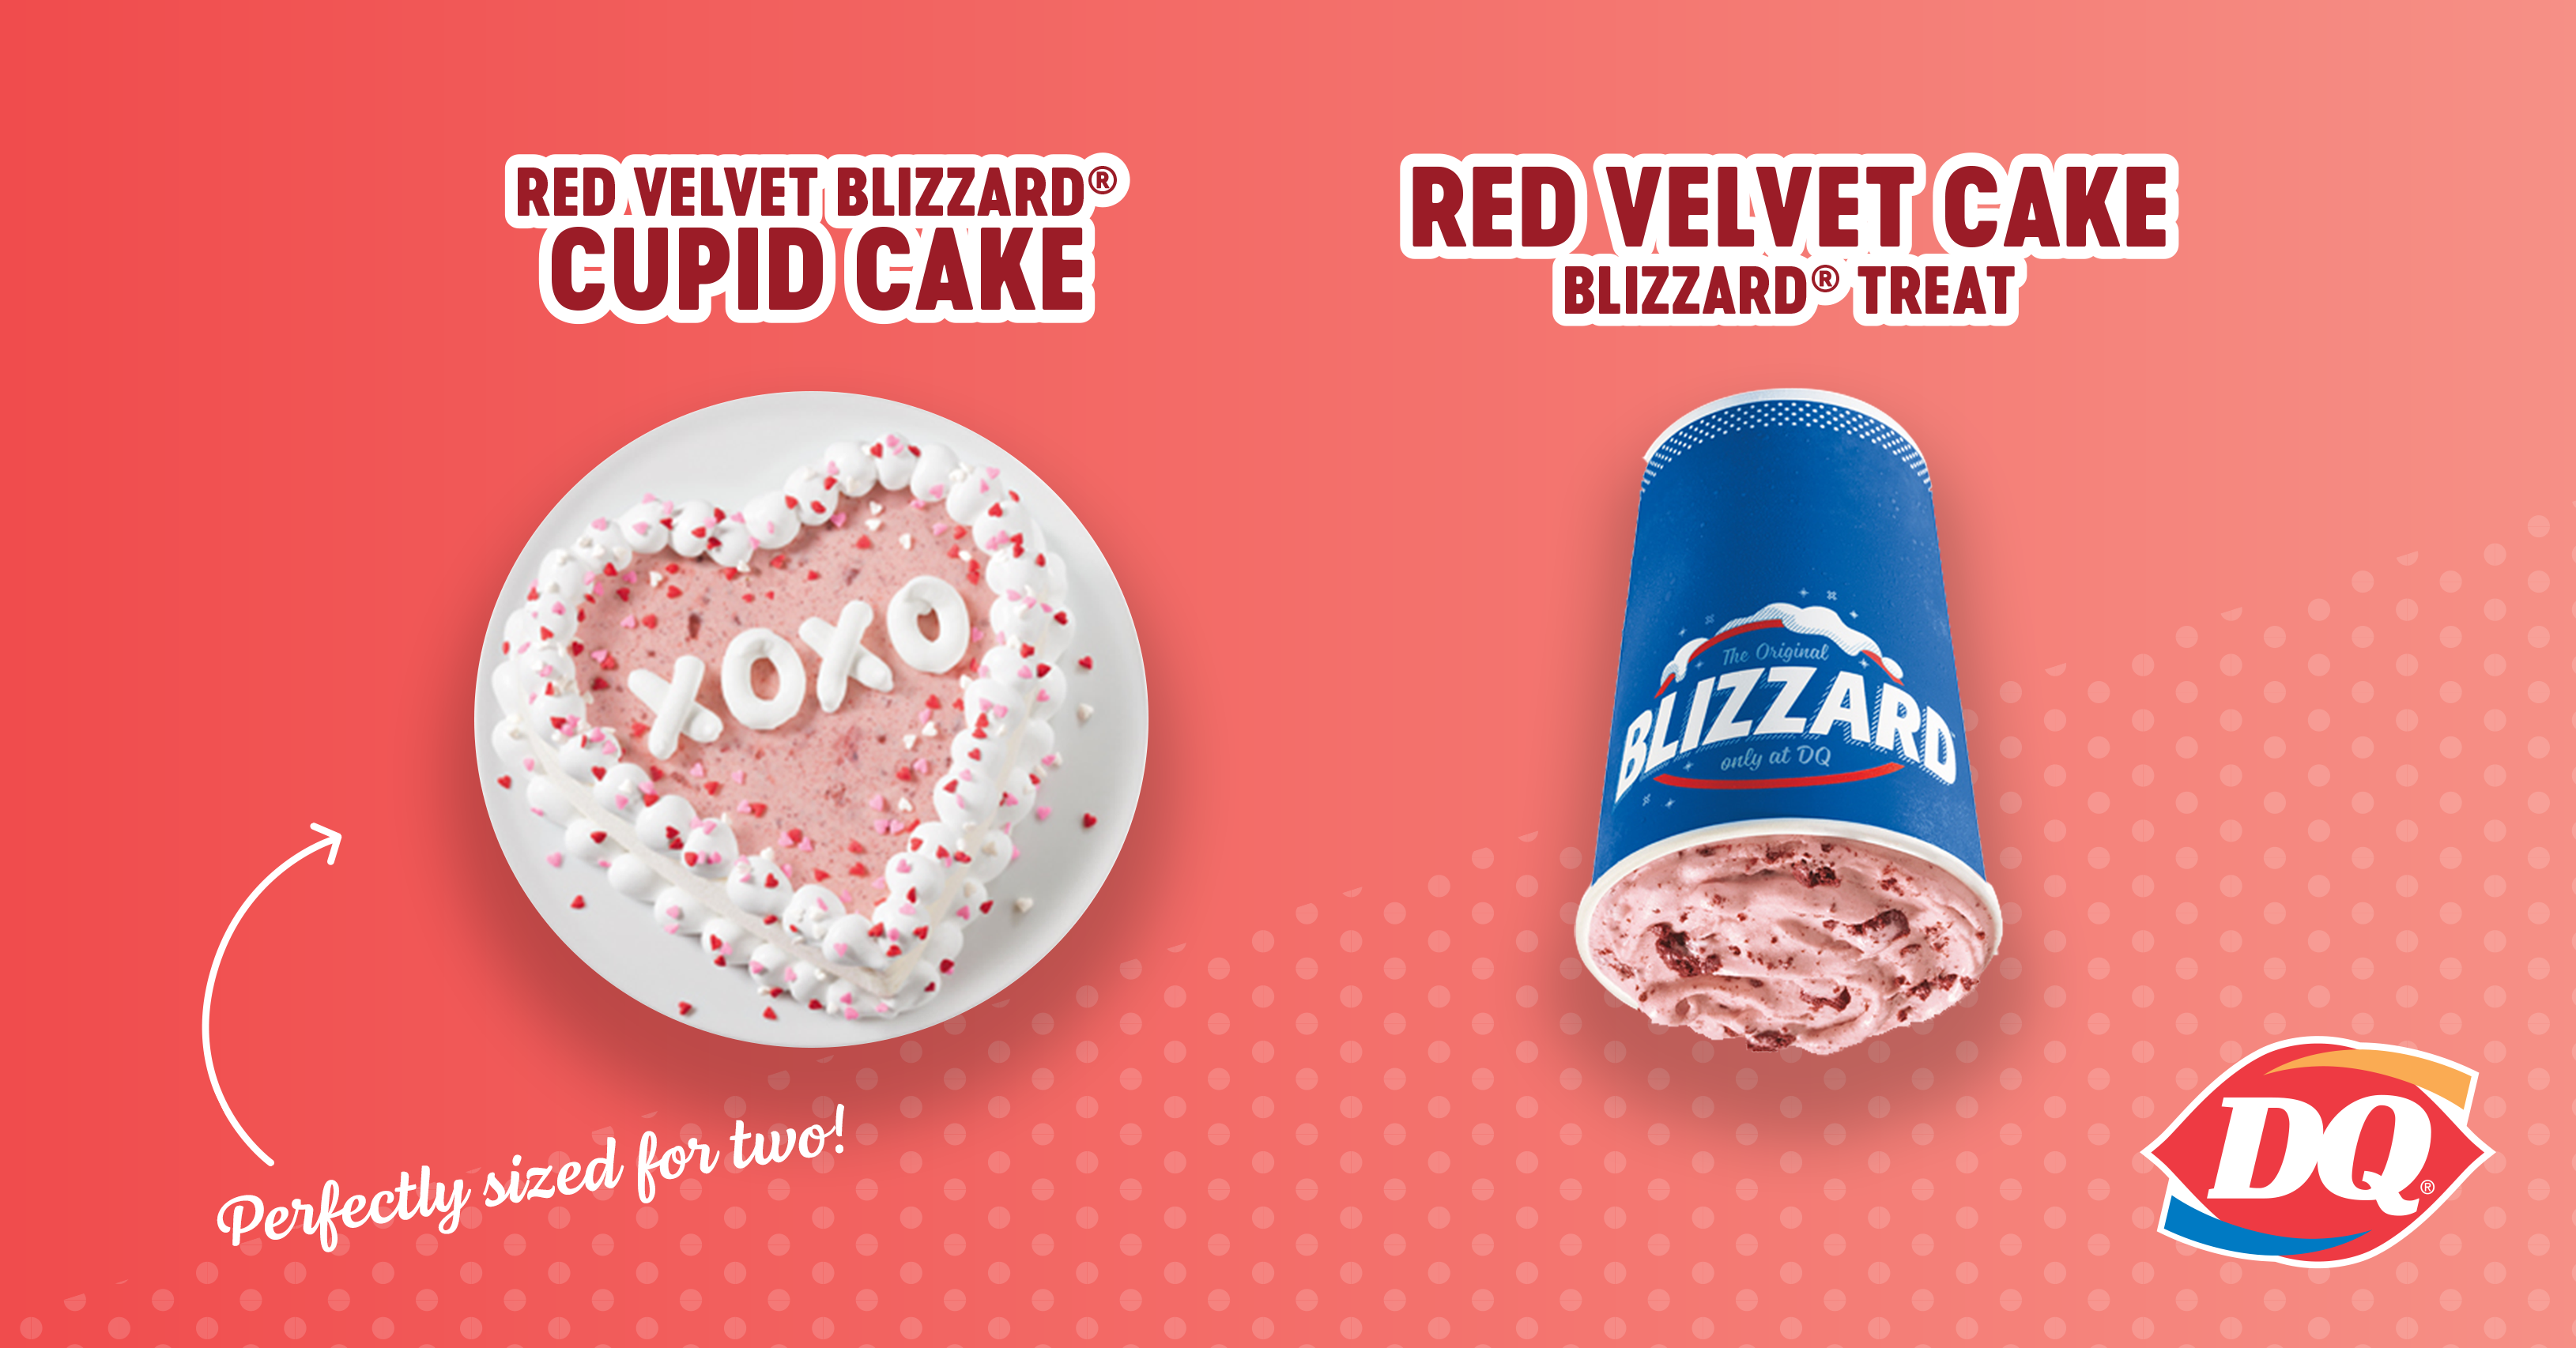 DQ Valentine's Day Cupid Cake and Red Velvet Cake Blizzard treat